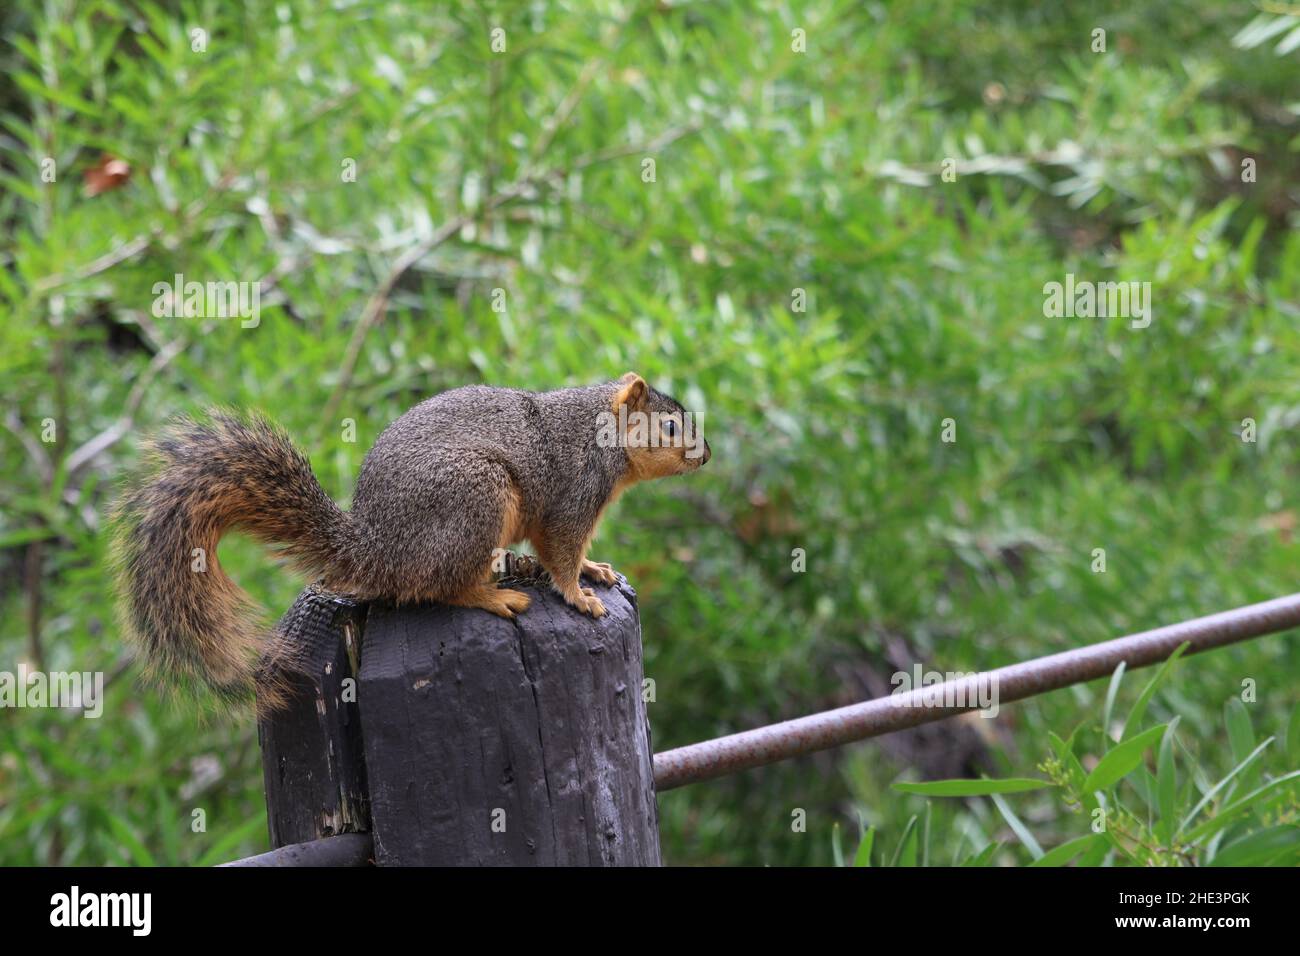 Overweight Squirrel in La Habra community park Stock Photo